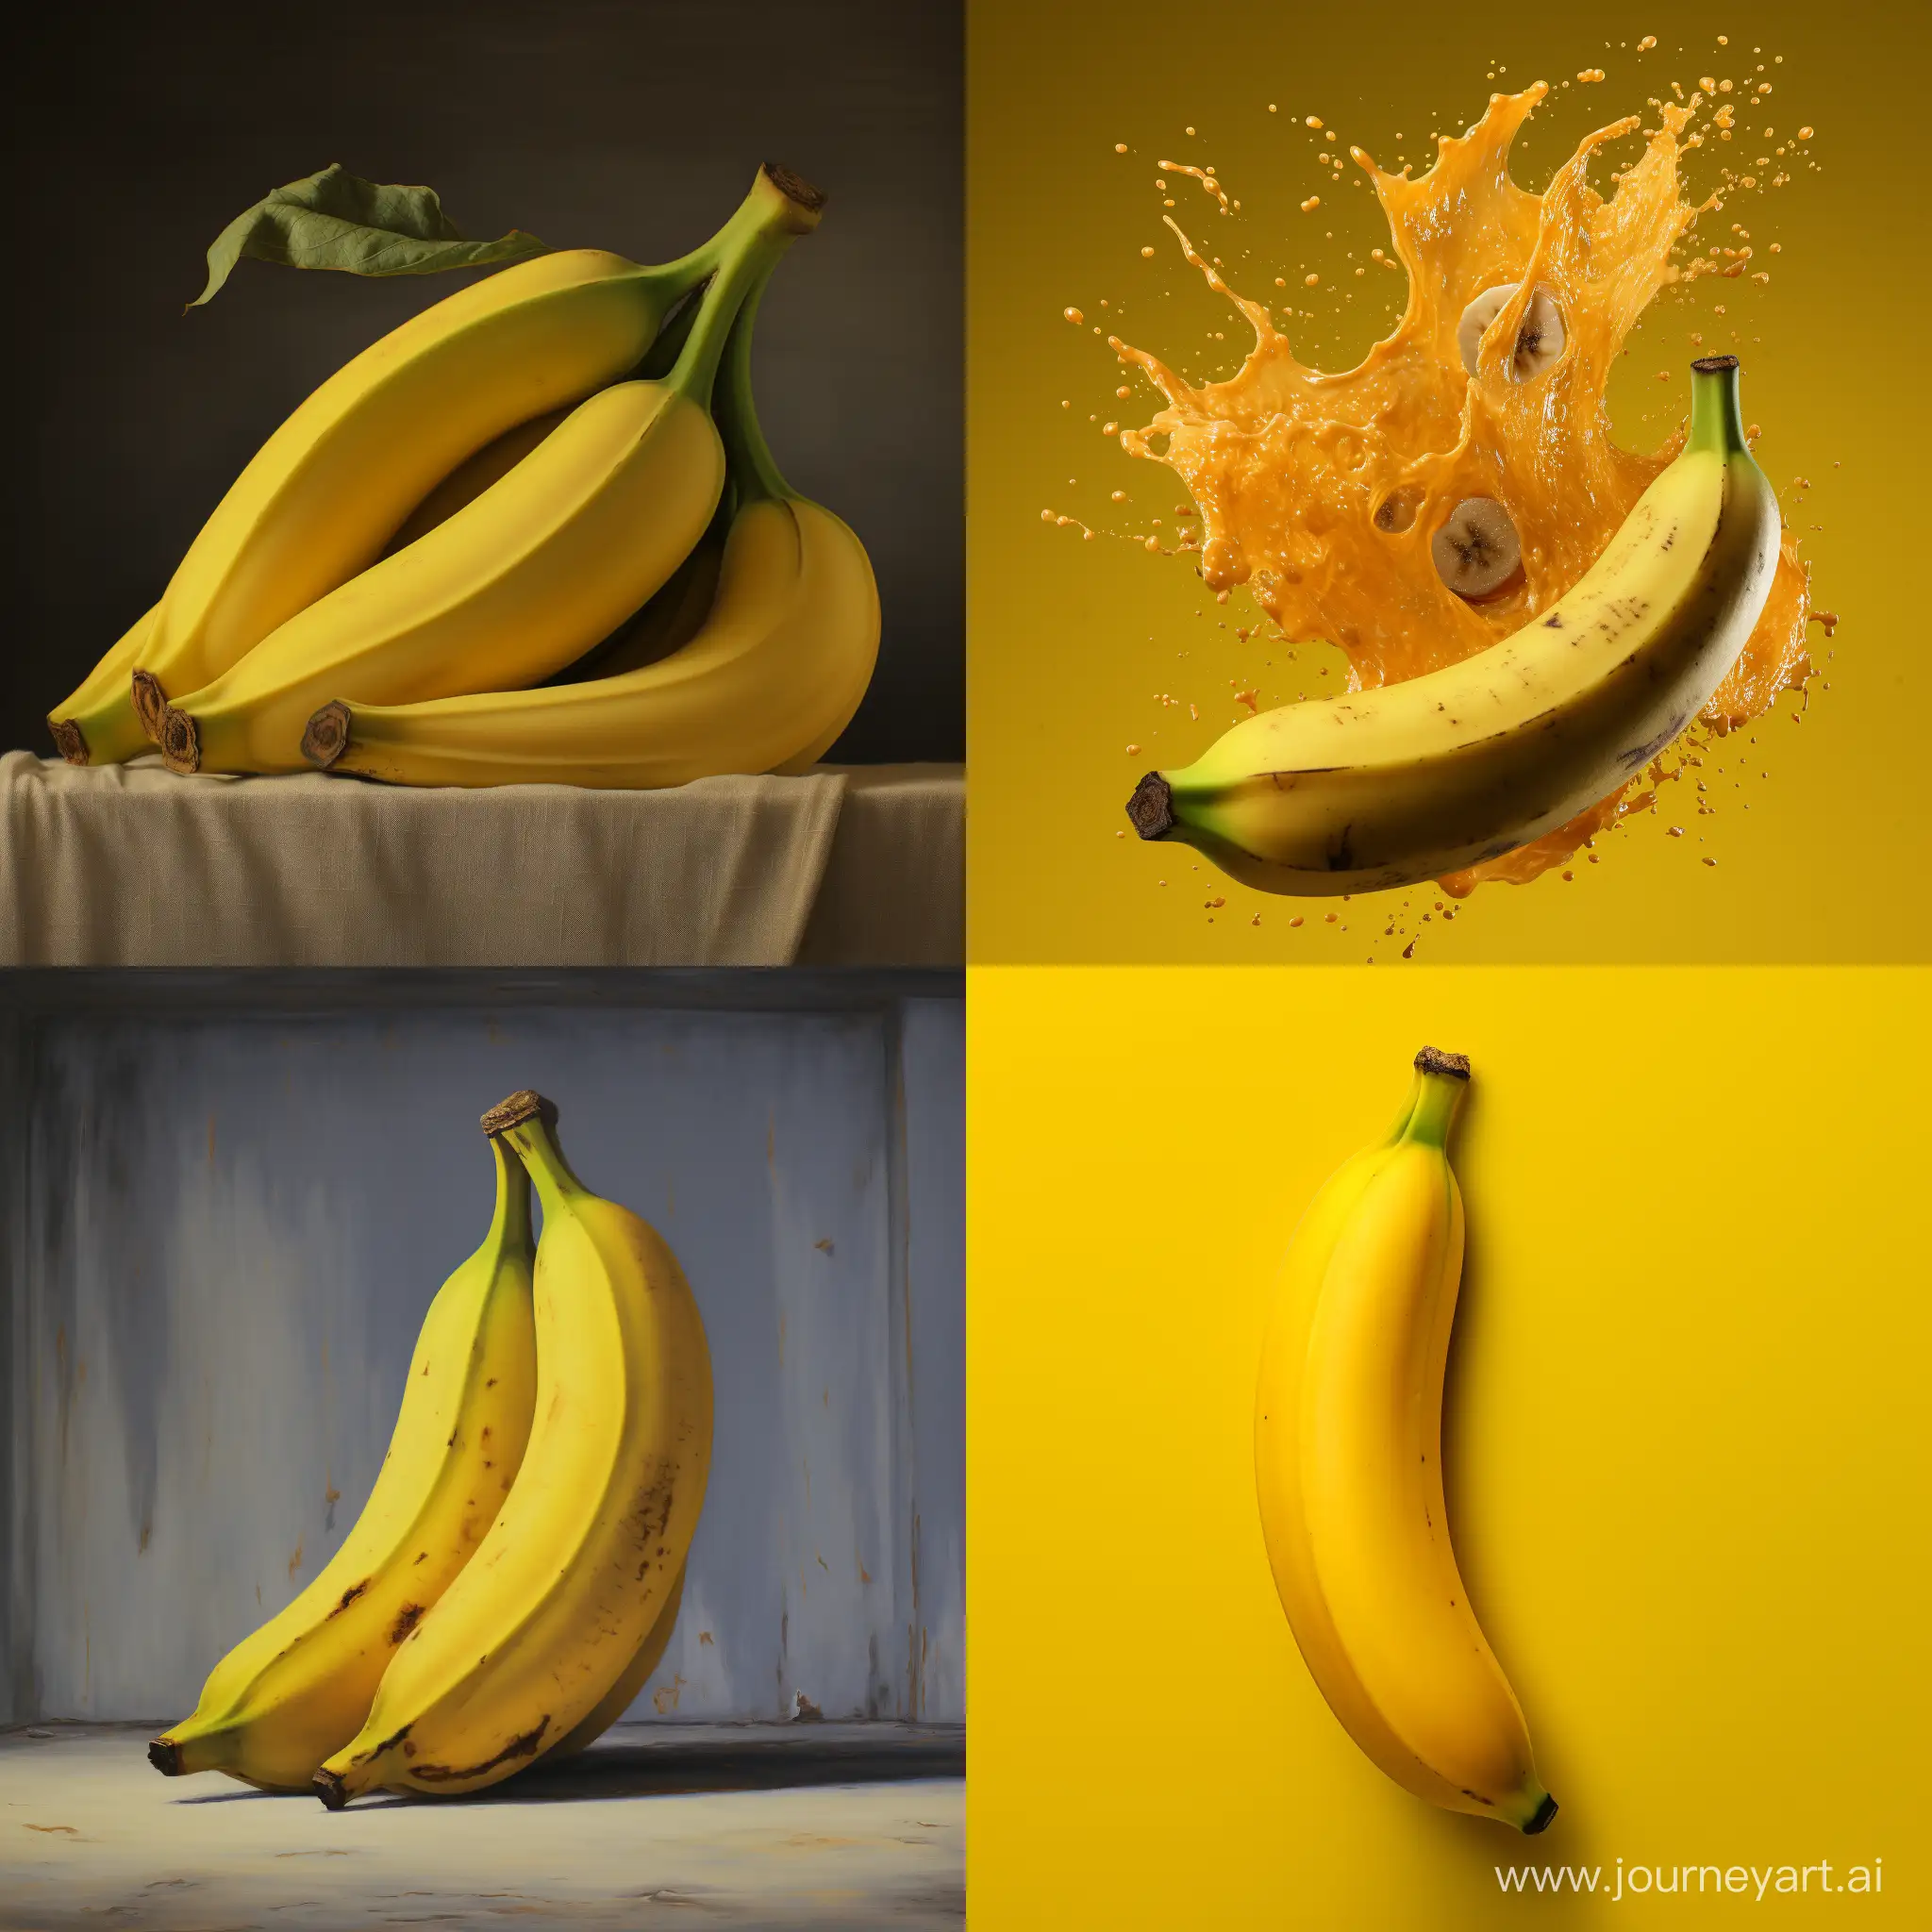 Vibrant-Banana-Artwork-A-Playful-Perspective-on-Yellow-Fruit